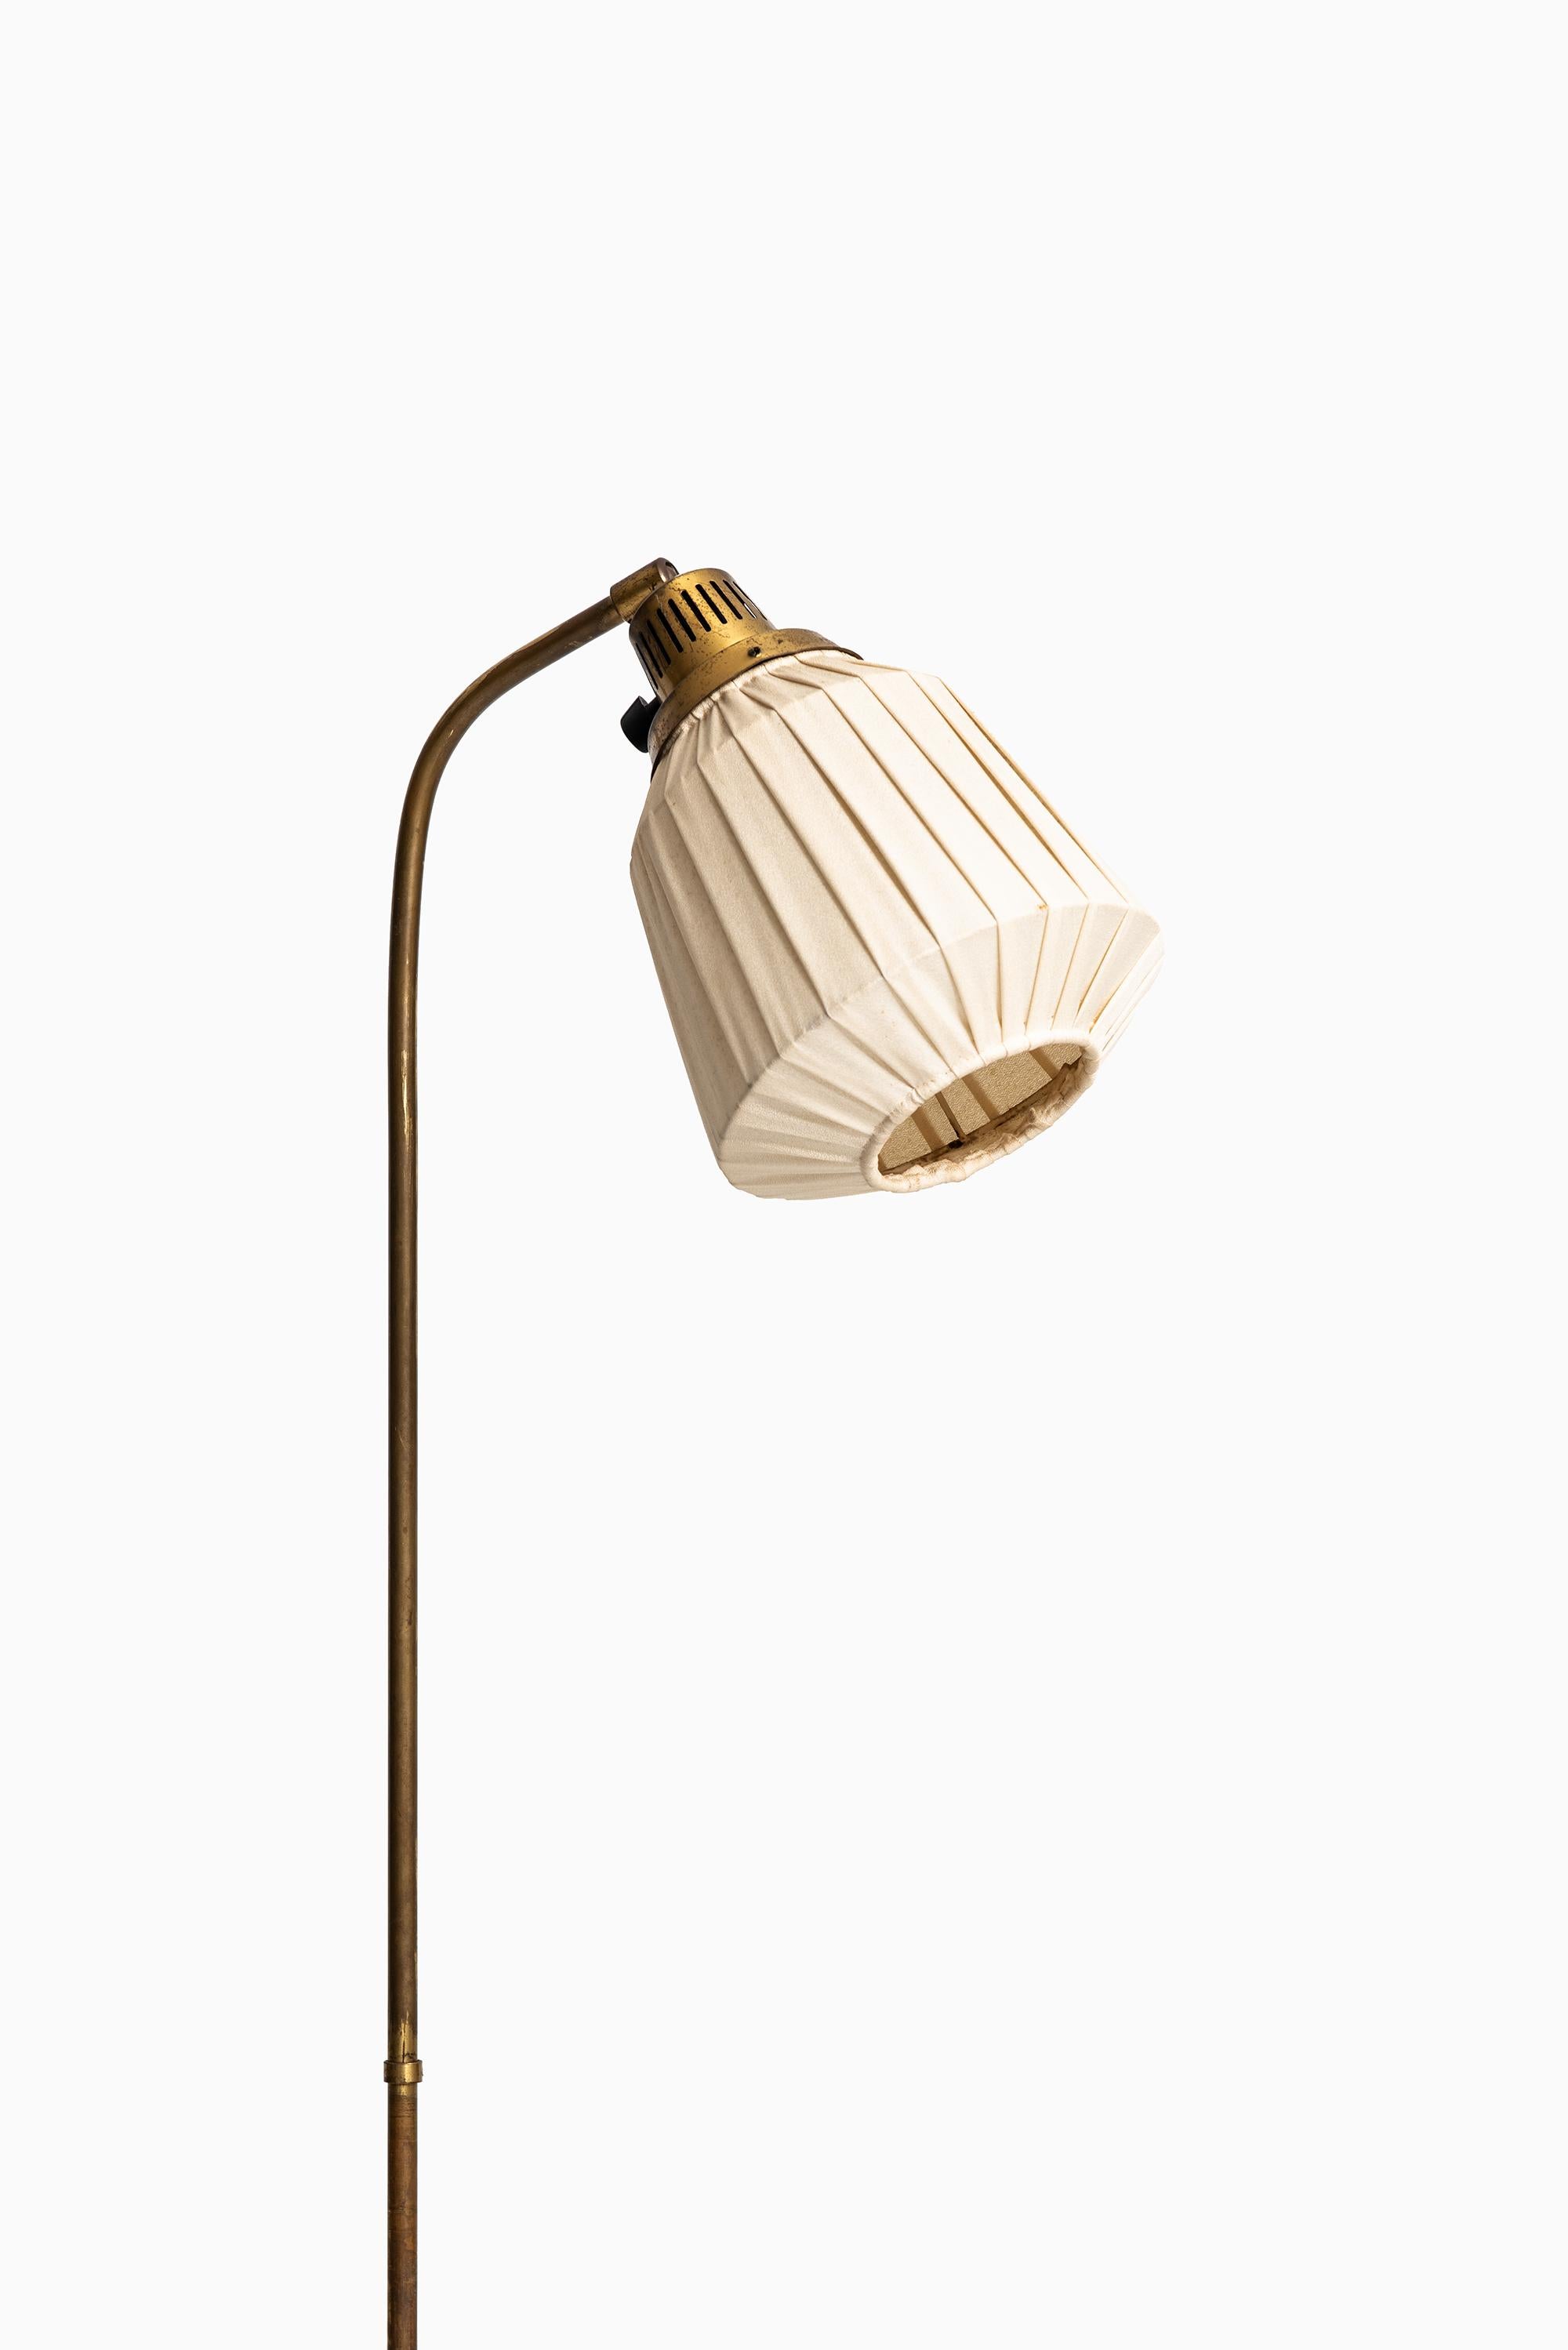 Rare height adjustable floor lamp designed by Hans Bergström. Produced by Ateljé Lyktan in Åhus, Sweden. Height adjustable between 116 -142 cm.